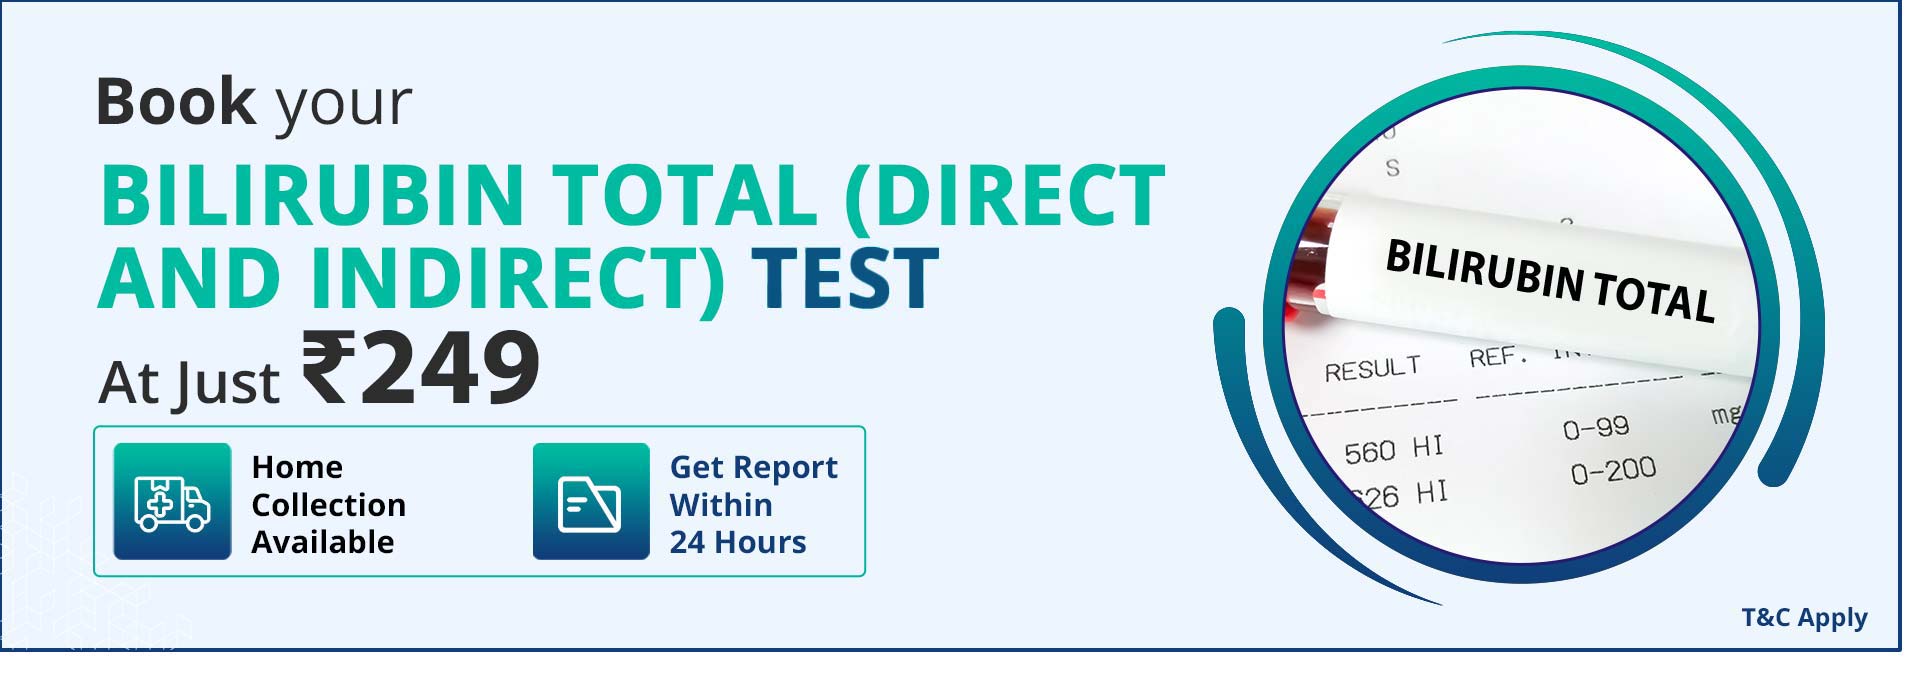 Bilirubin Total (Direct and Indirect) Test